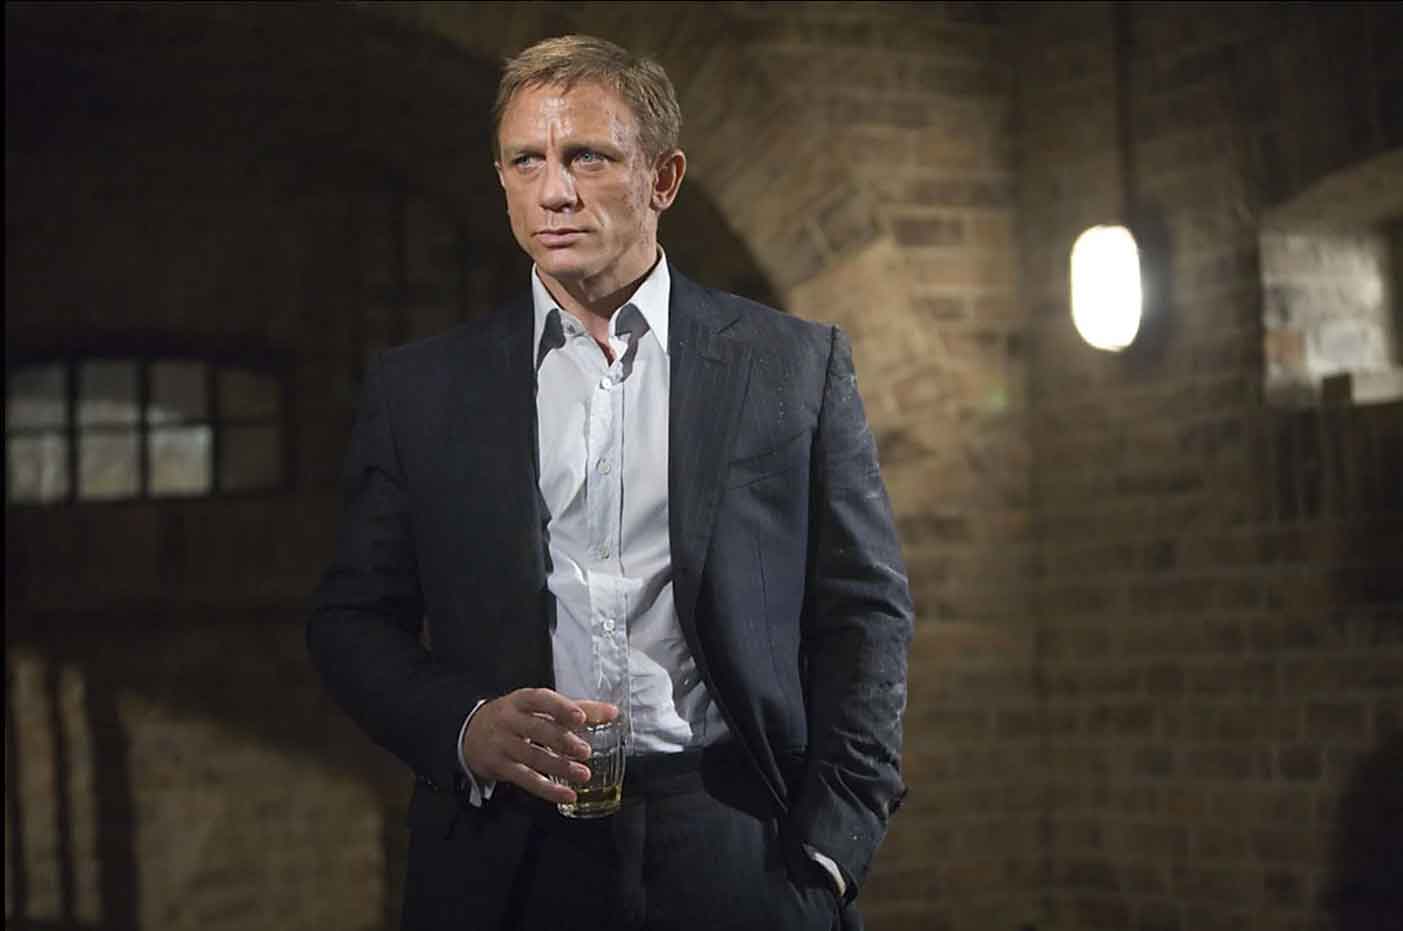 Tom Ford dresses newest James Bond